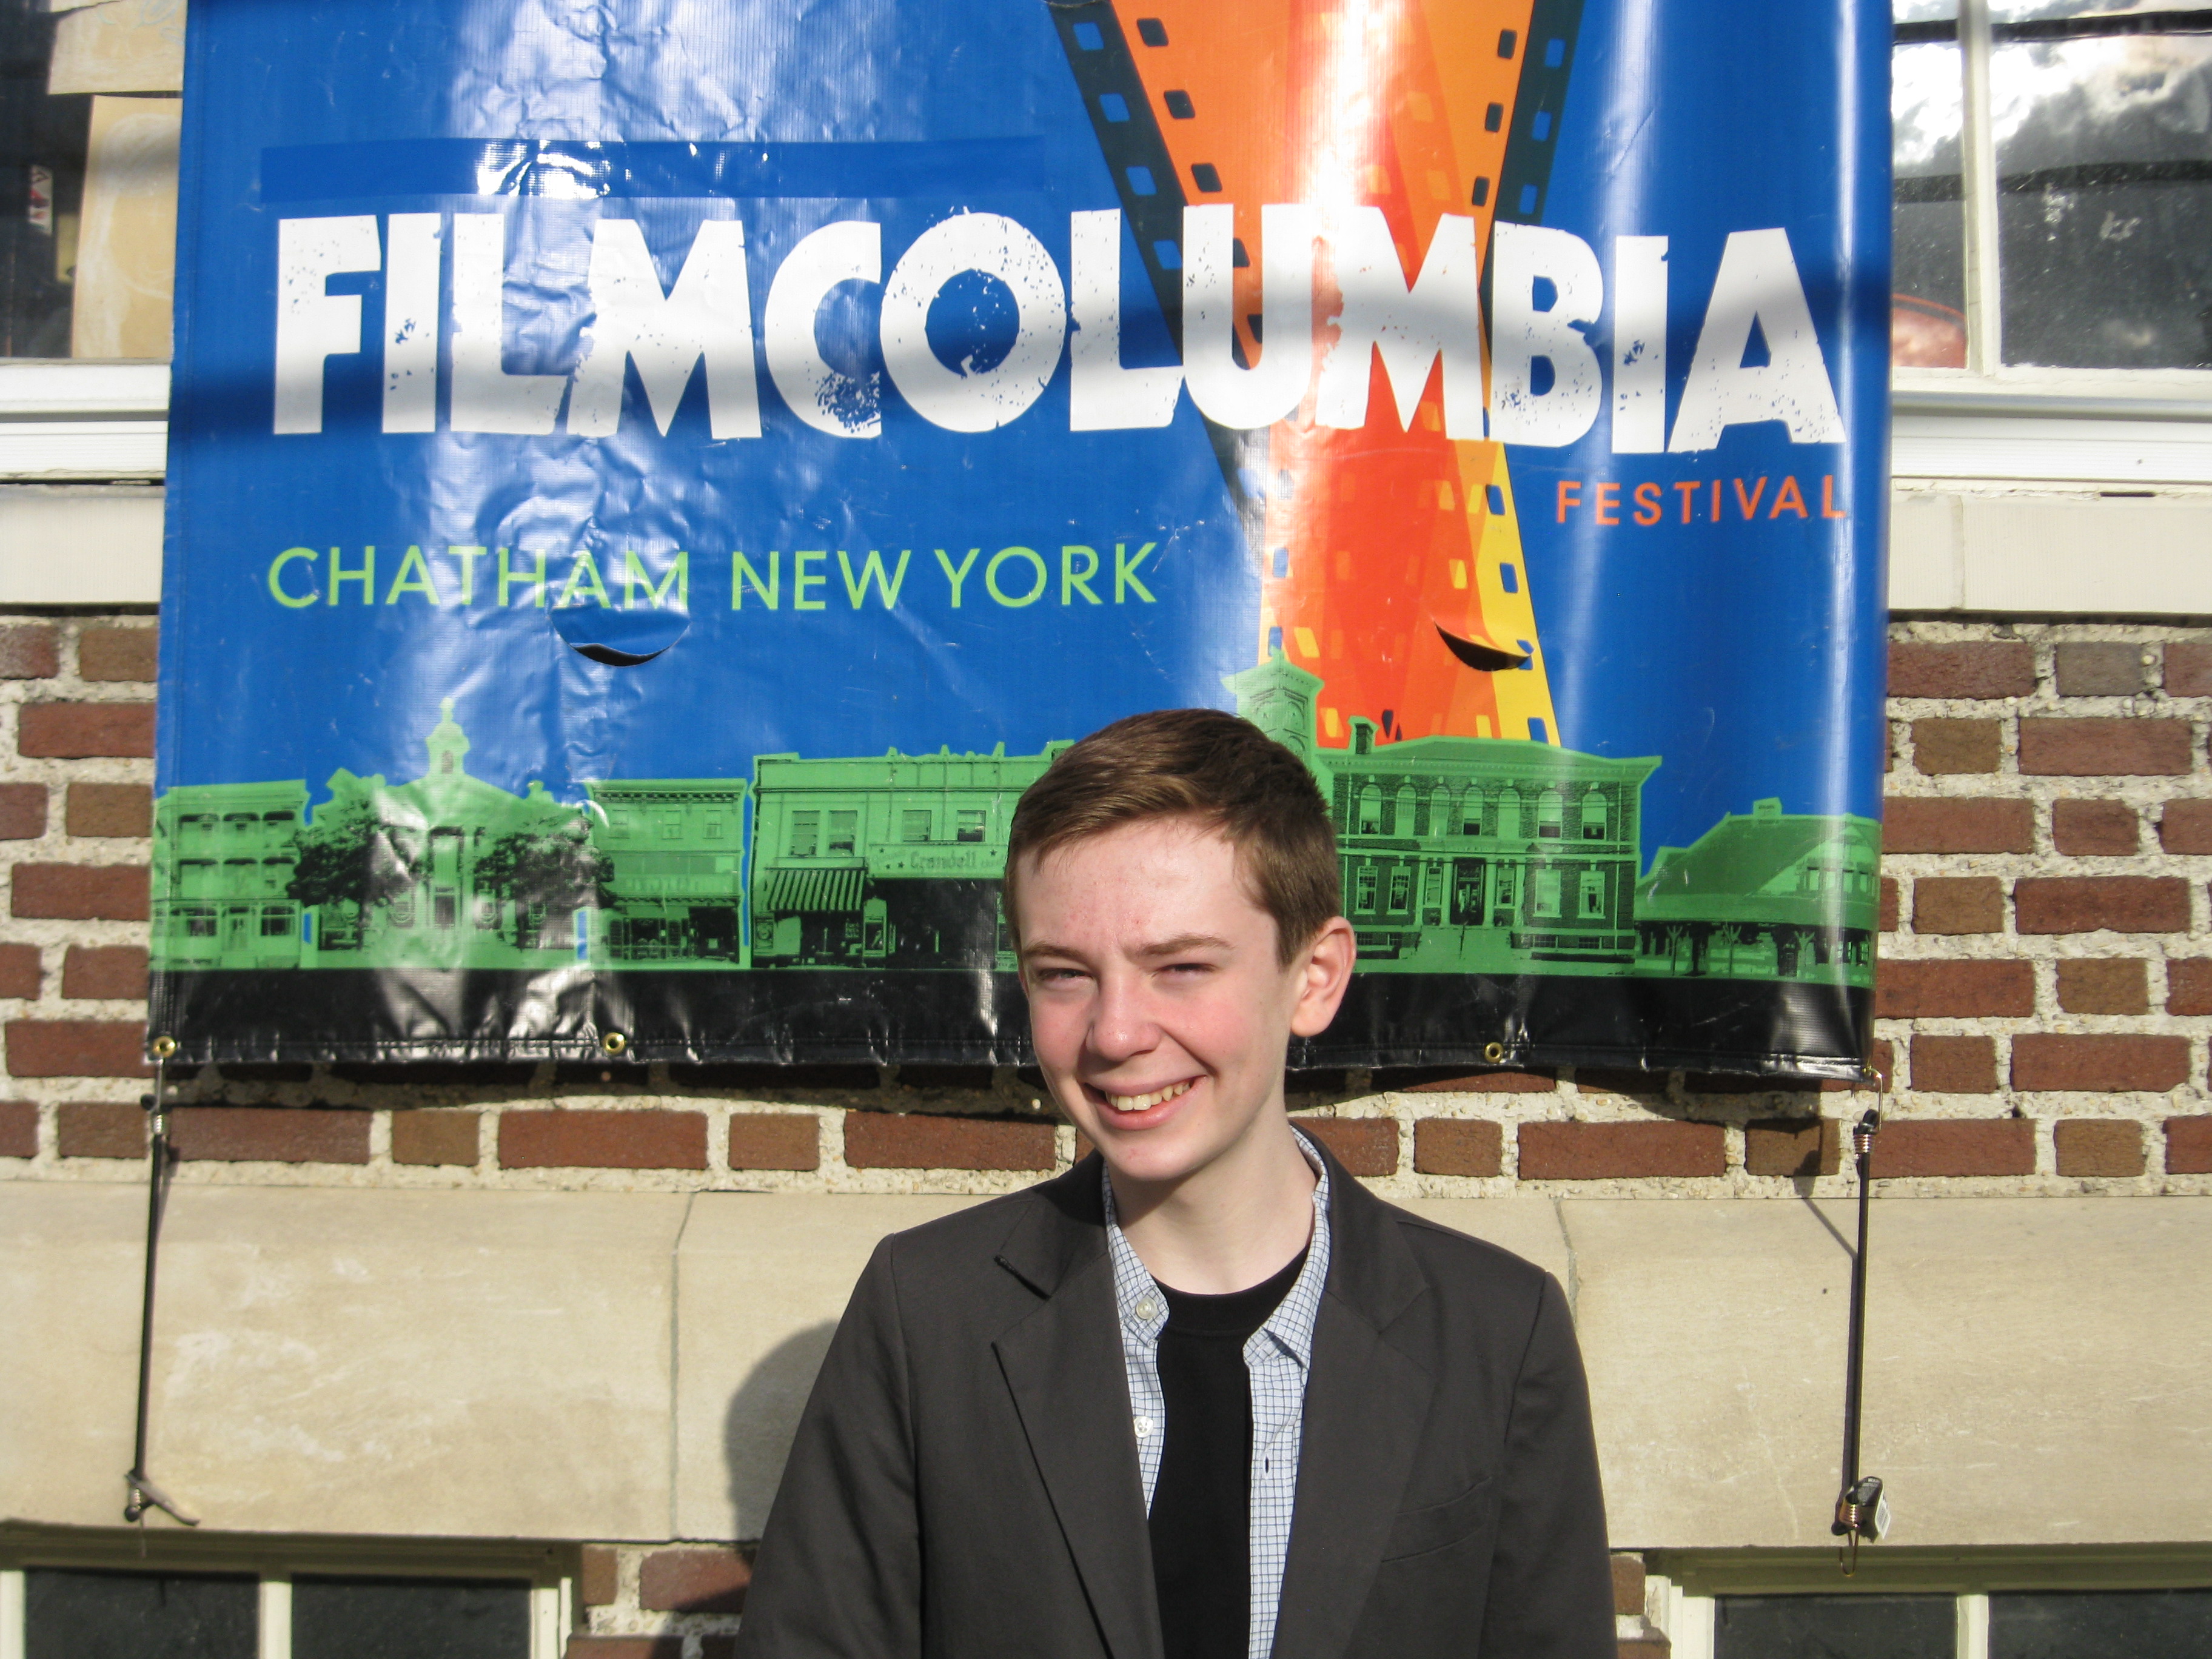 At Film Columbia Film Fesitval - 10/21/12